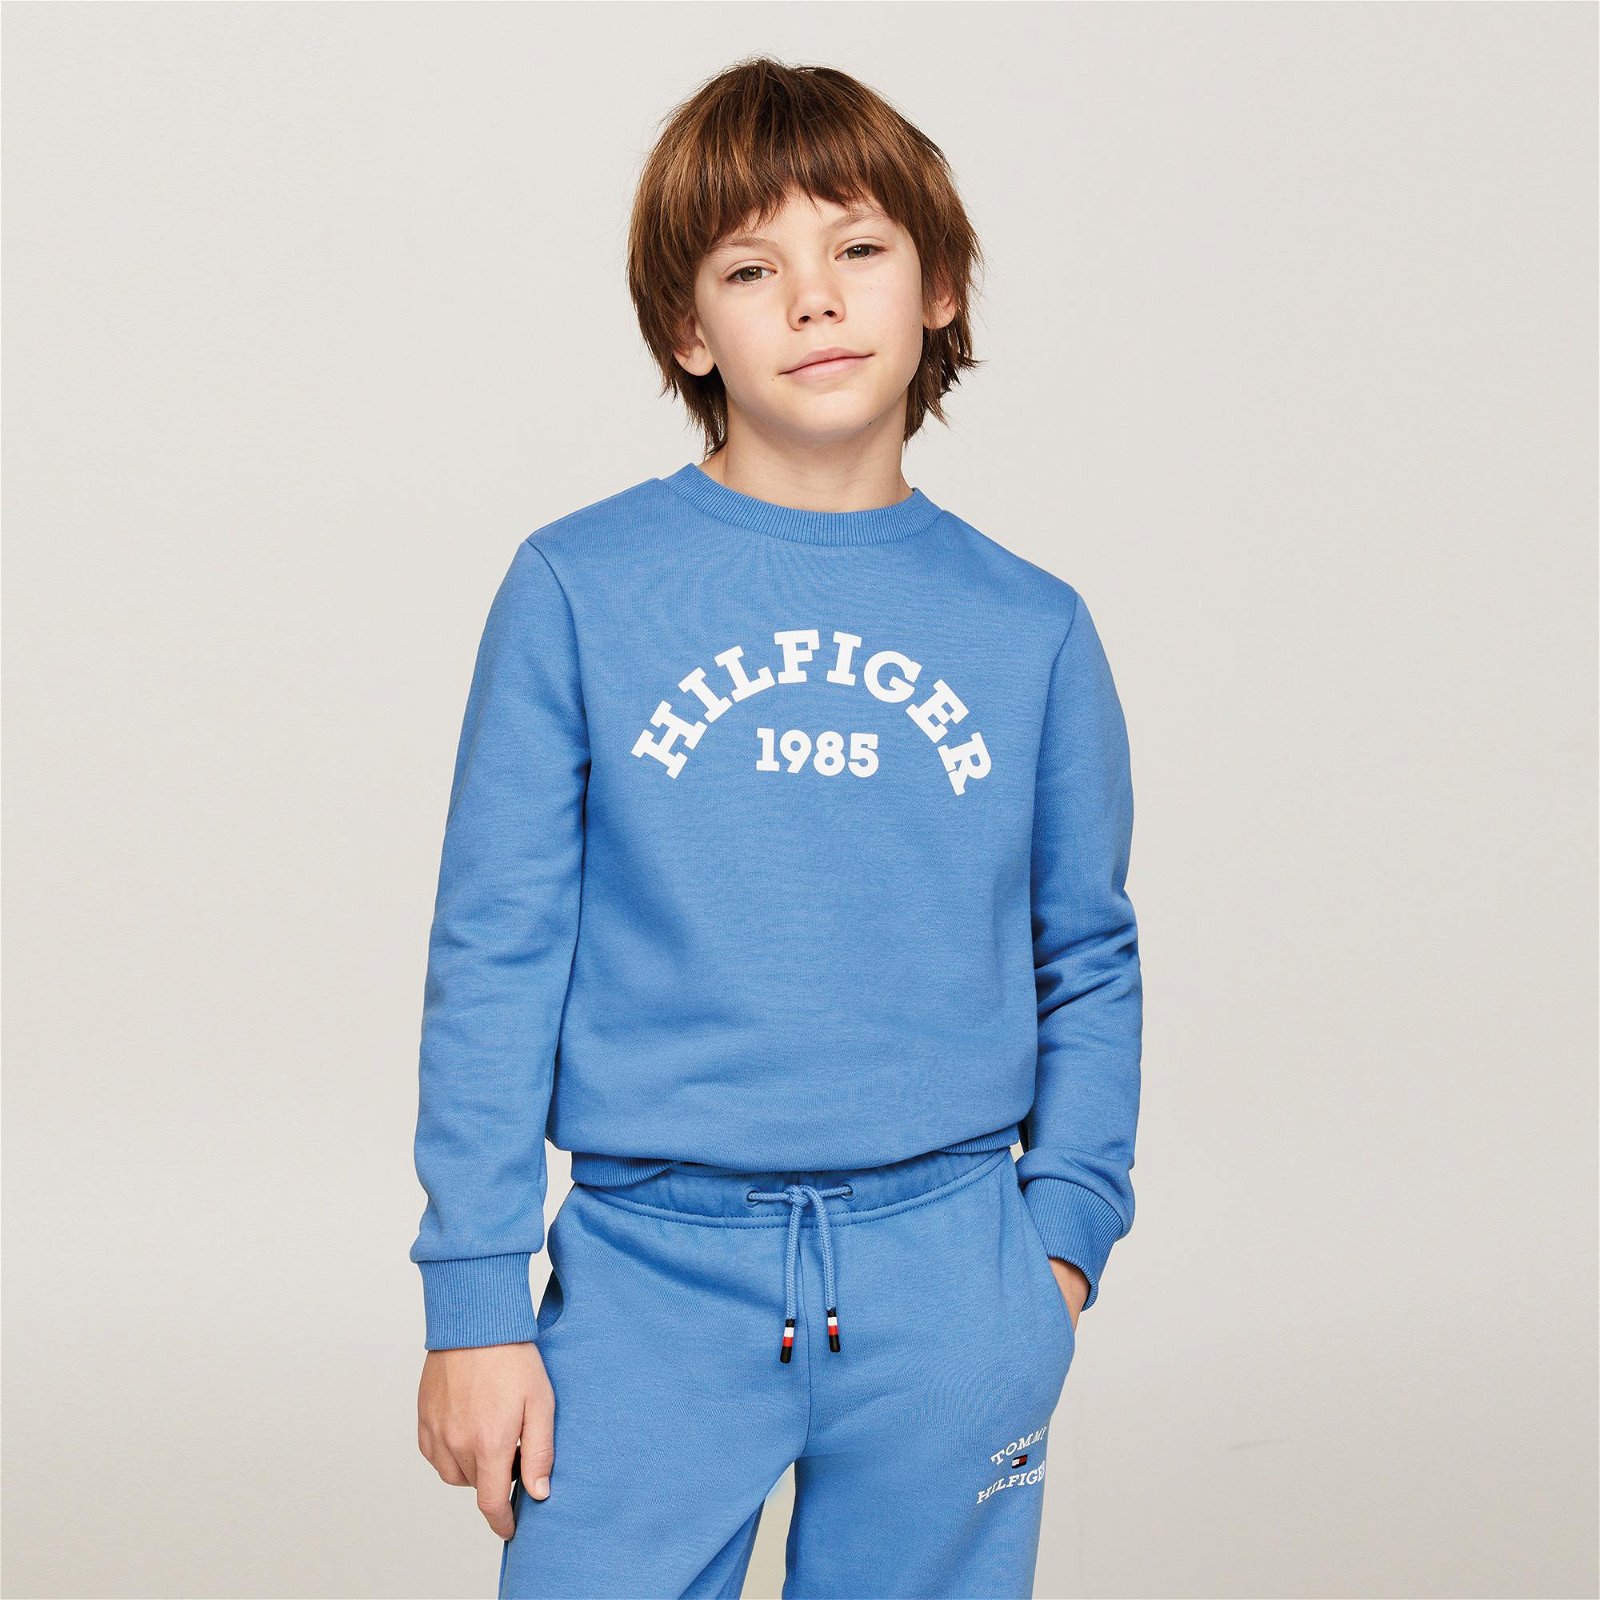 Tommy Hilfiger 1985 Erkek Çocuk Mavi Sweatshirt